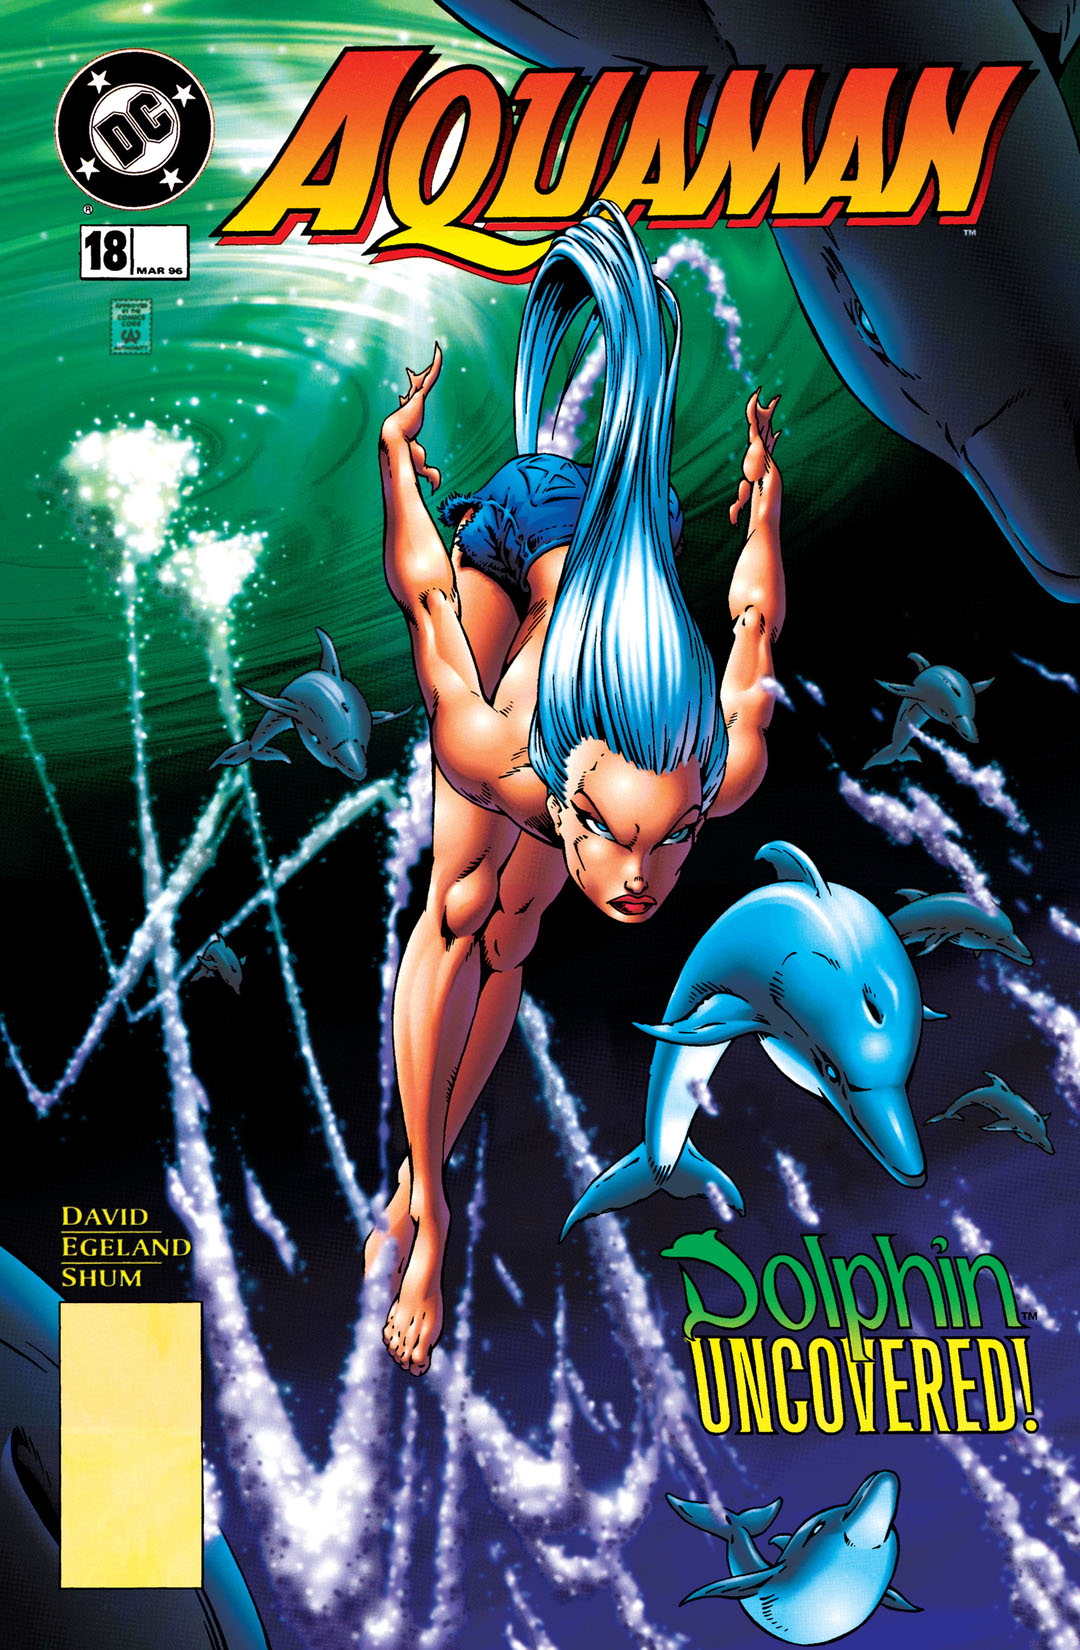 Aquaman (1994-) #18 preview images